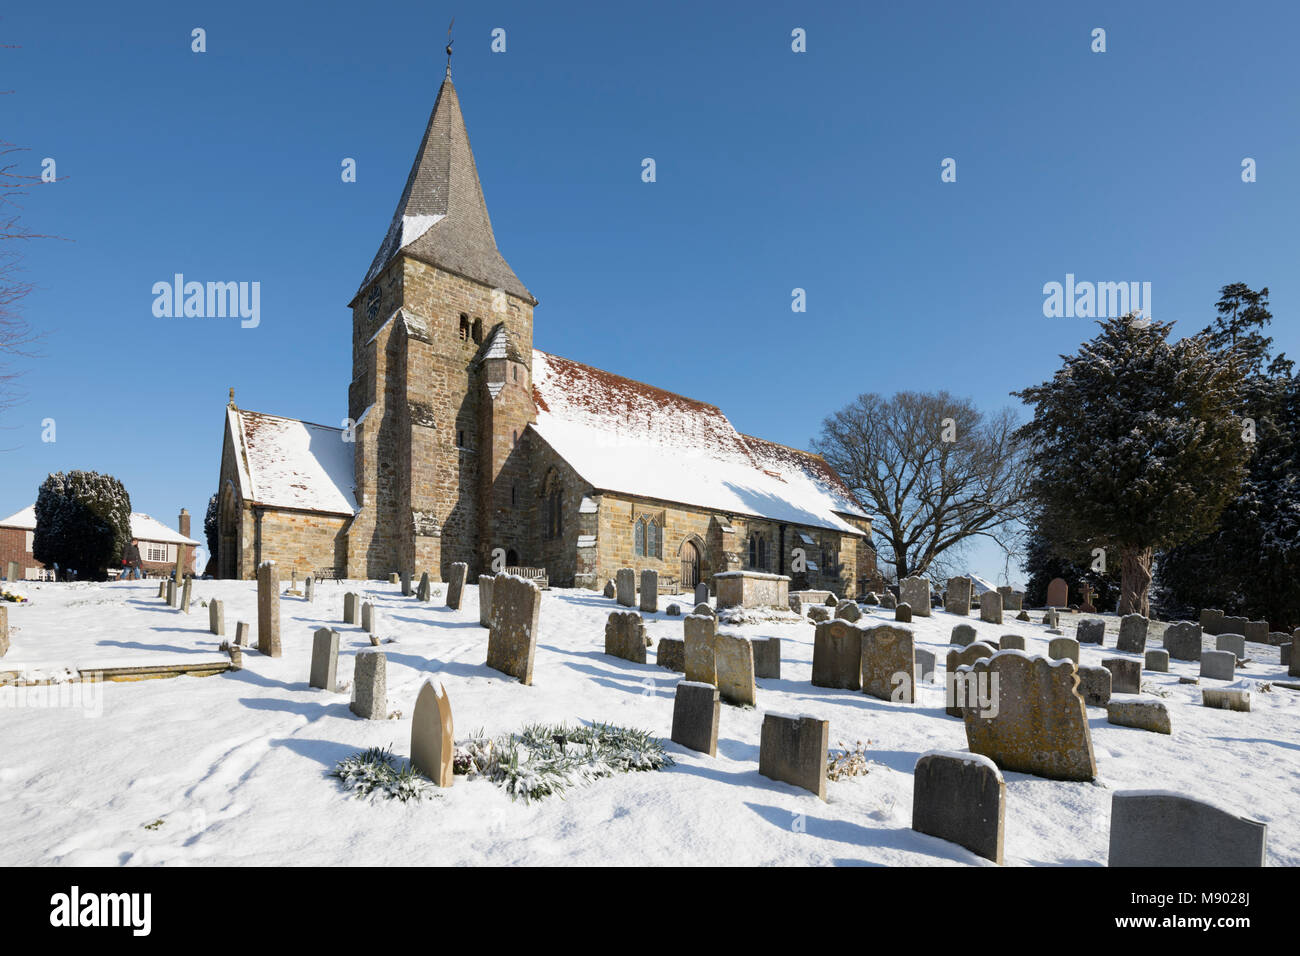 St. Bartholomew's church in snow, Burwash, East Sussex, England, United Kingdom, Europe Stock Photo